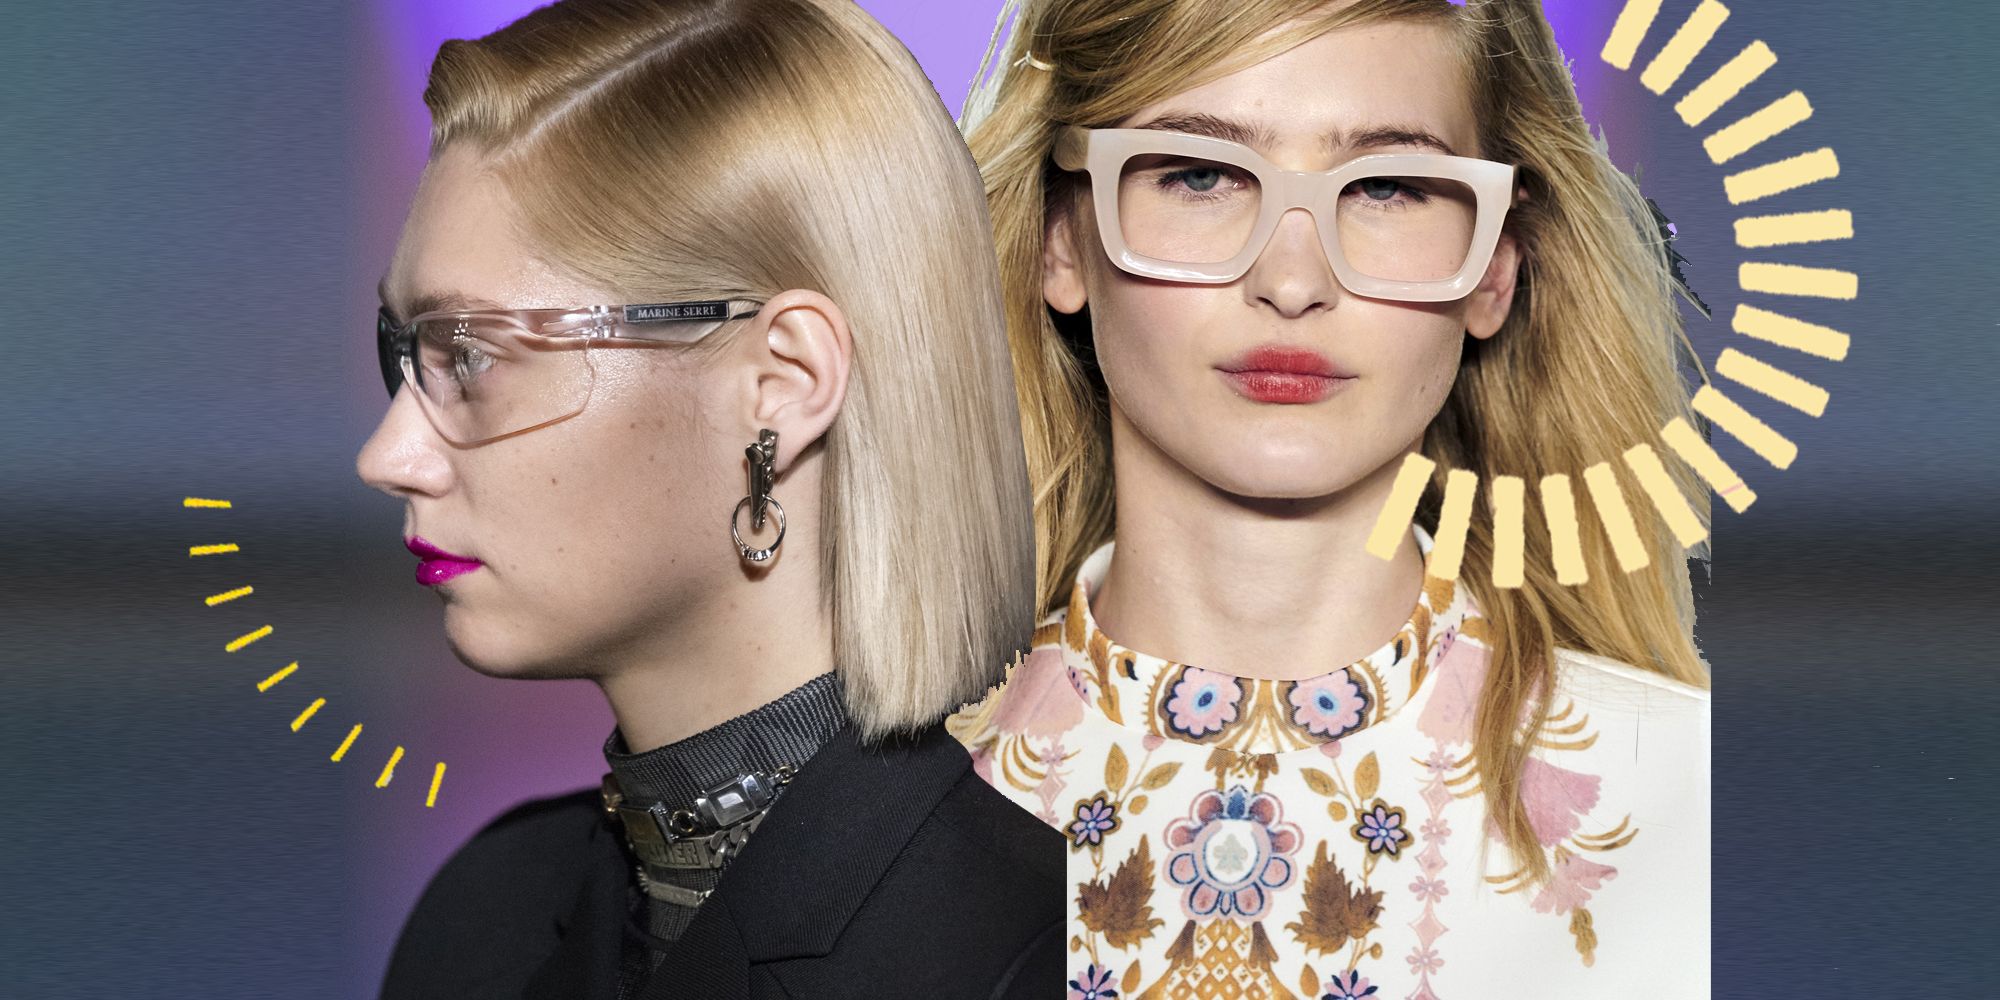 Occhiali da vista tendenze moda 2020 by Cosmopolitan